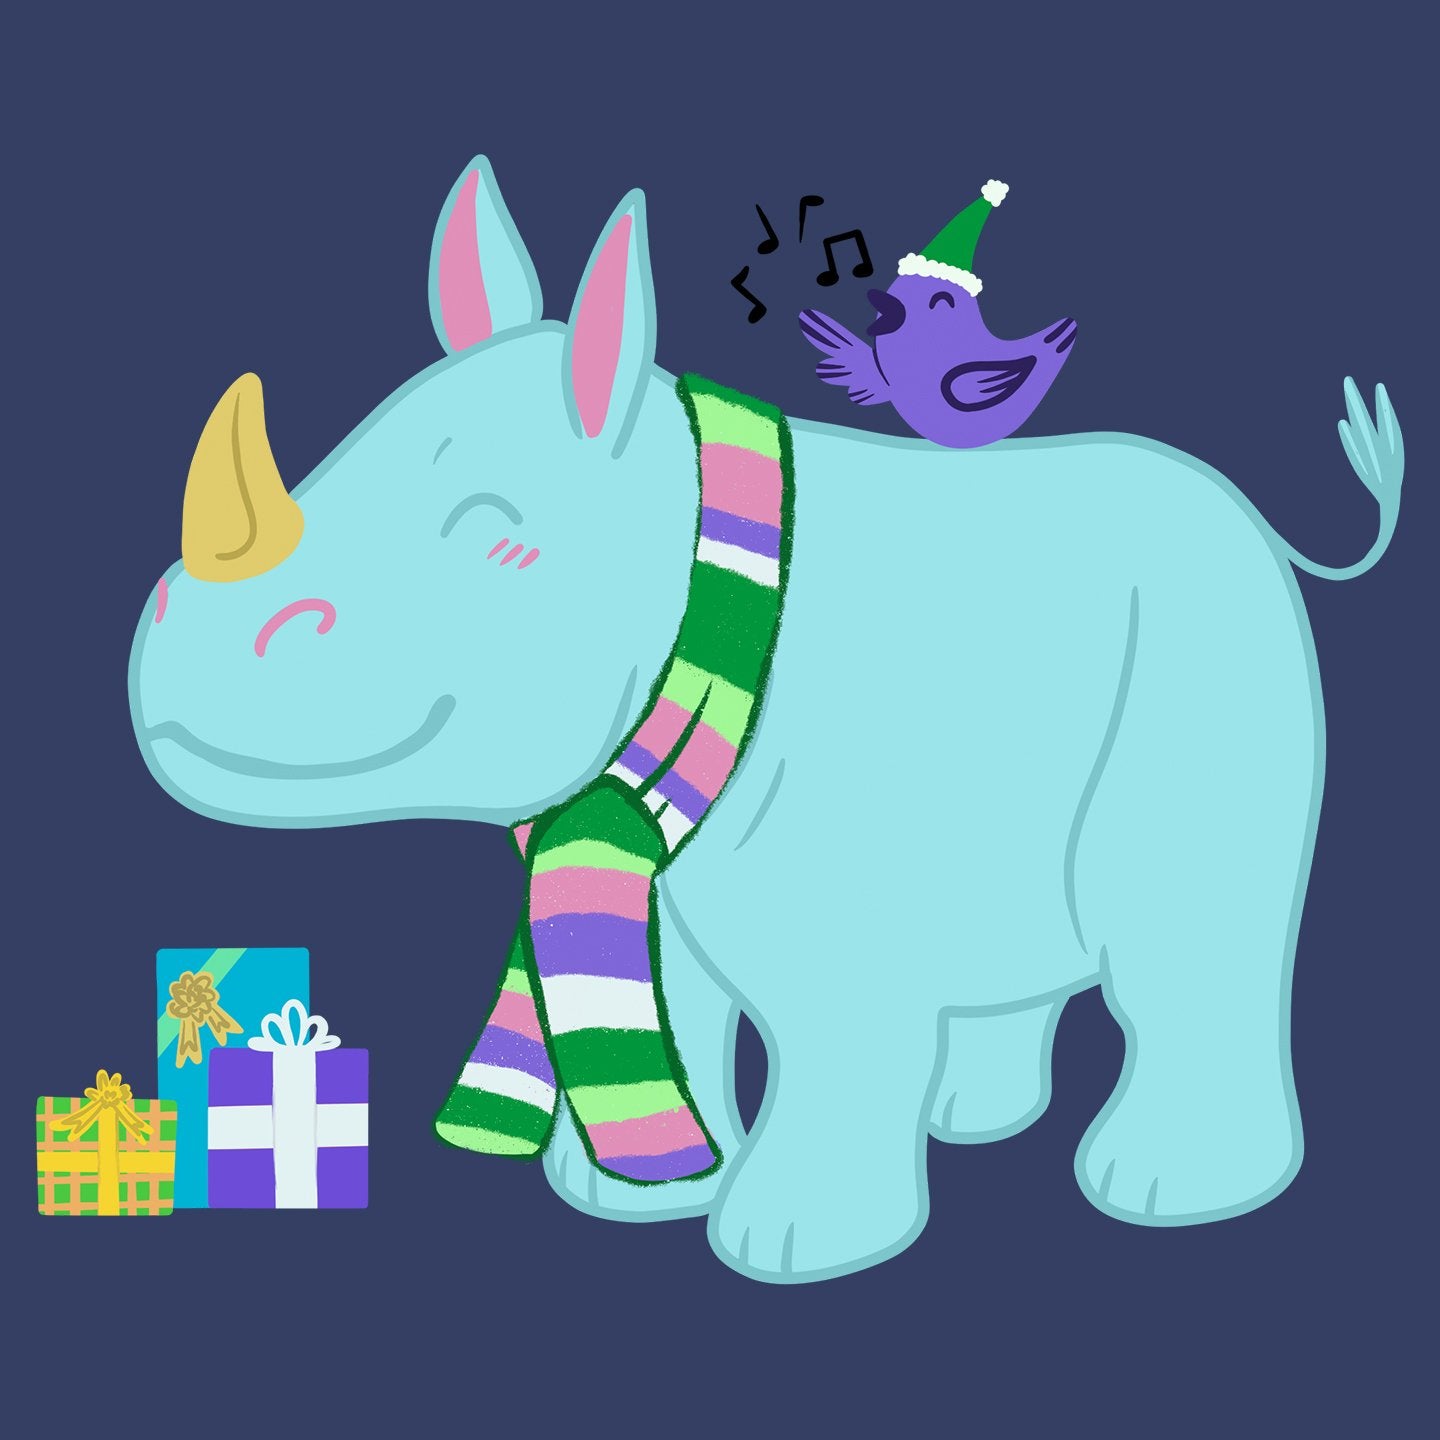 Christmas Rhino - Adult Unisex Long Sleeve T-Shirt